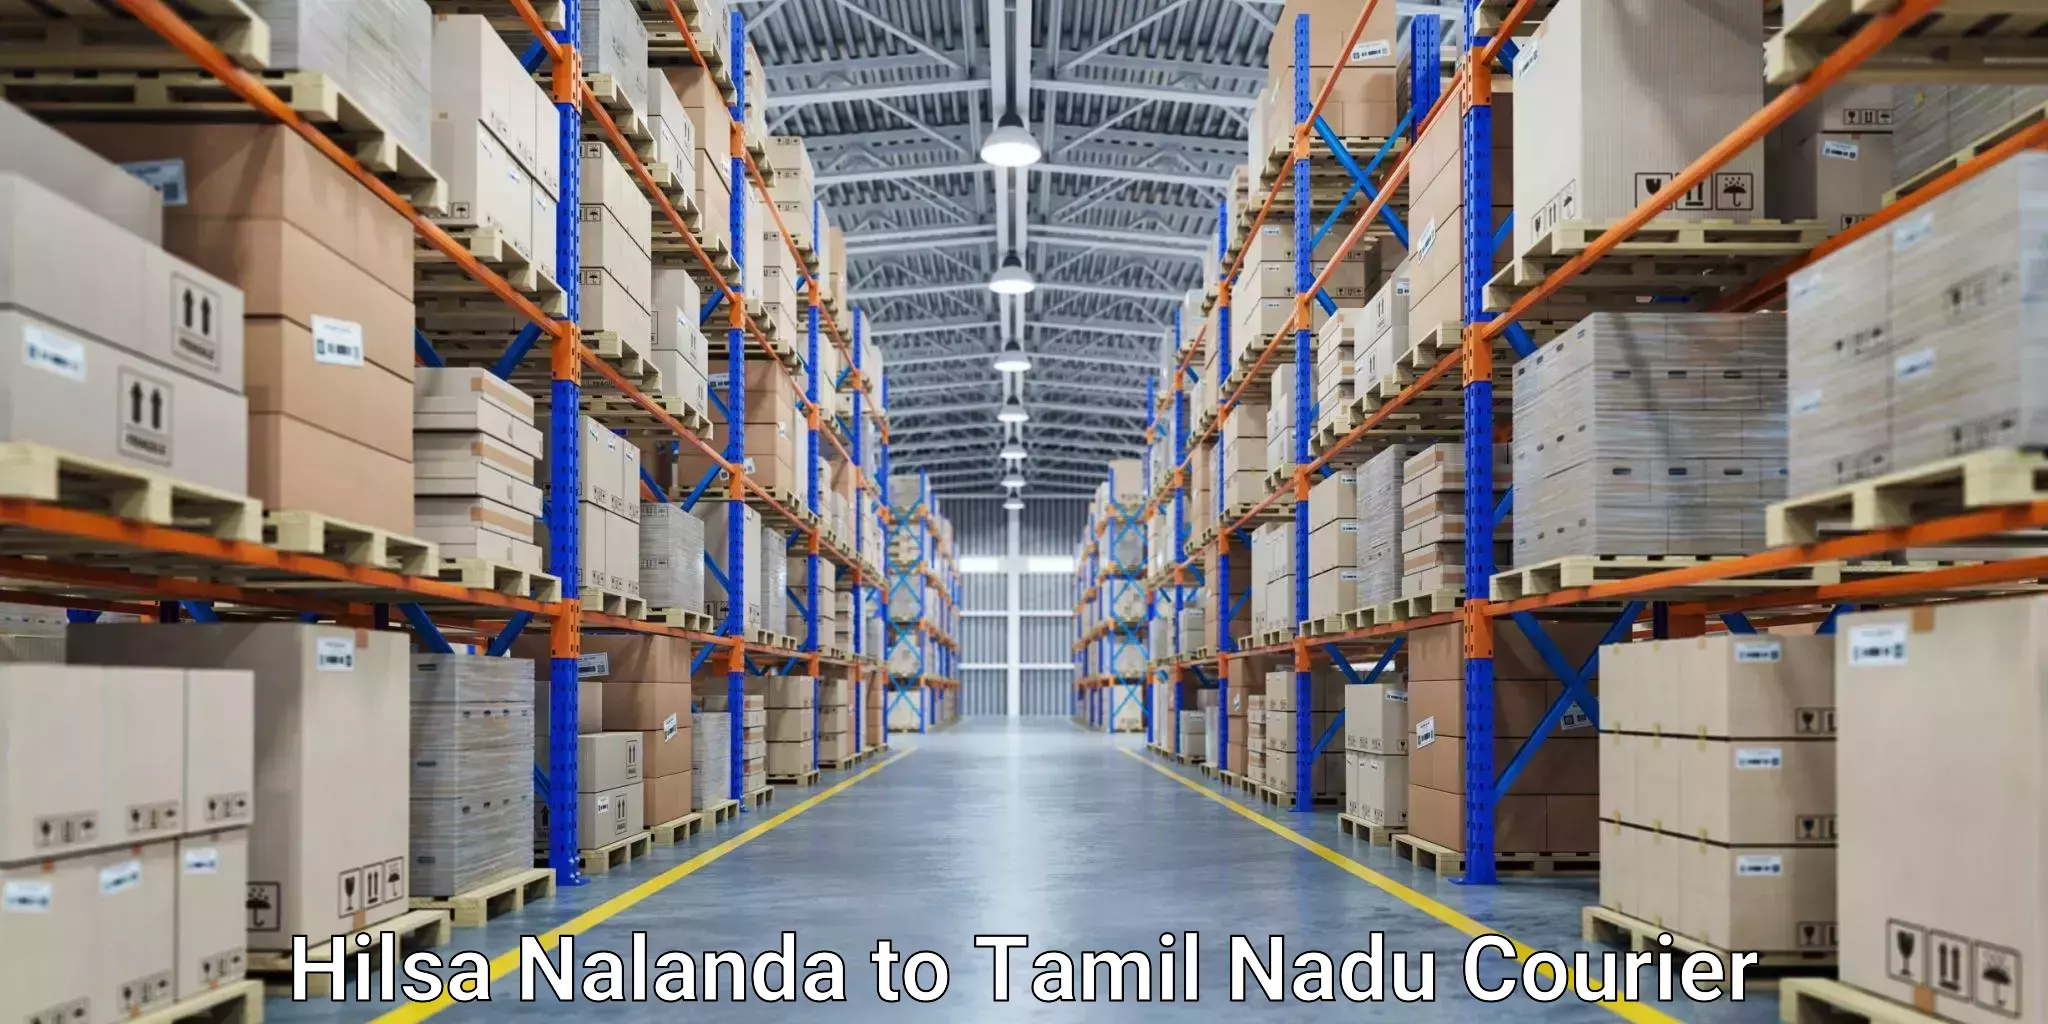 Next-day delivery options Hilsa Nalanda to Tamil Nadu